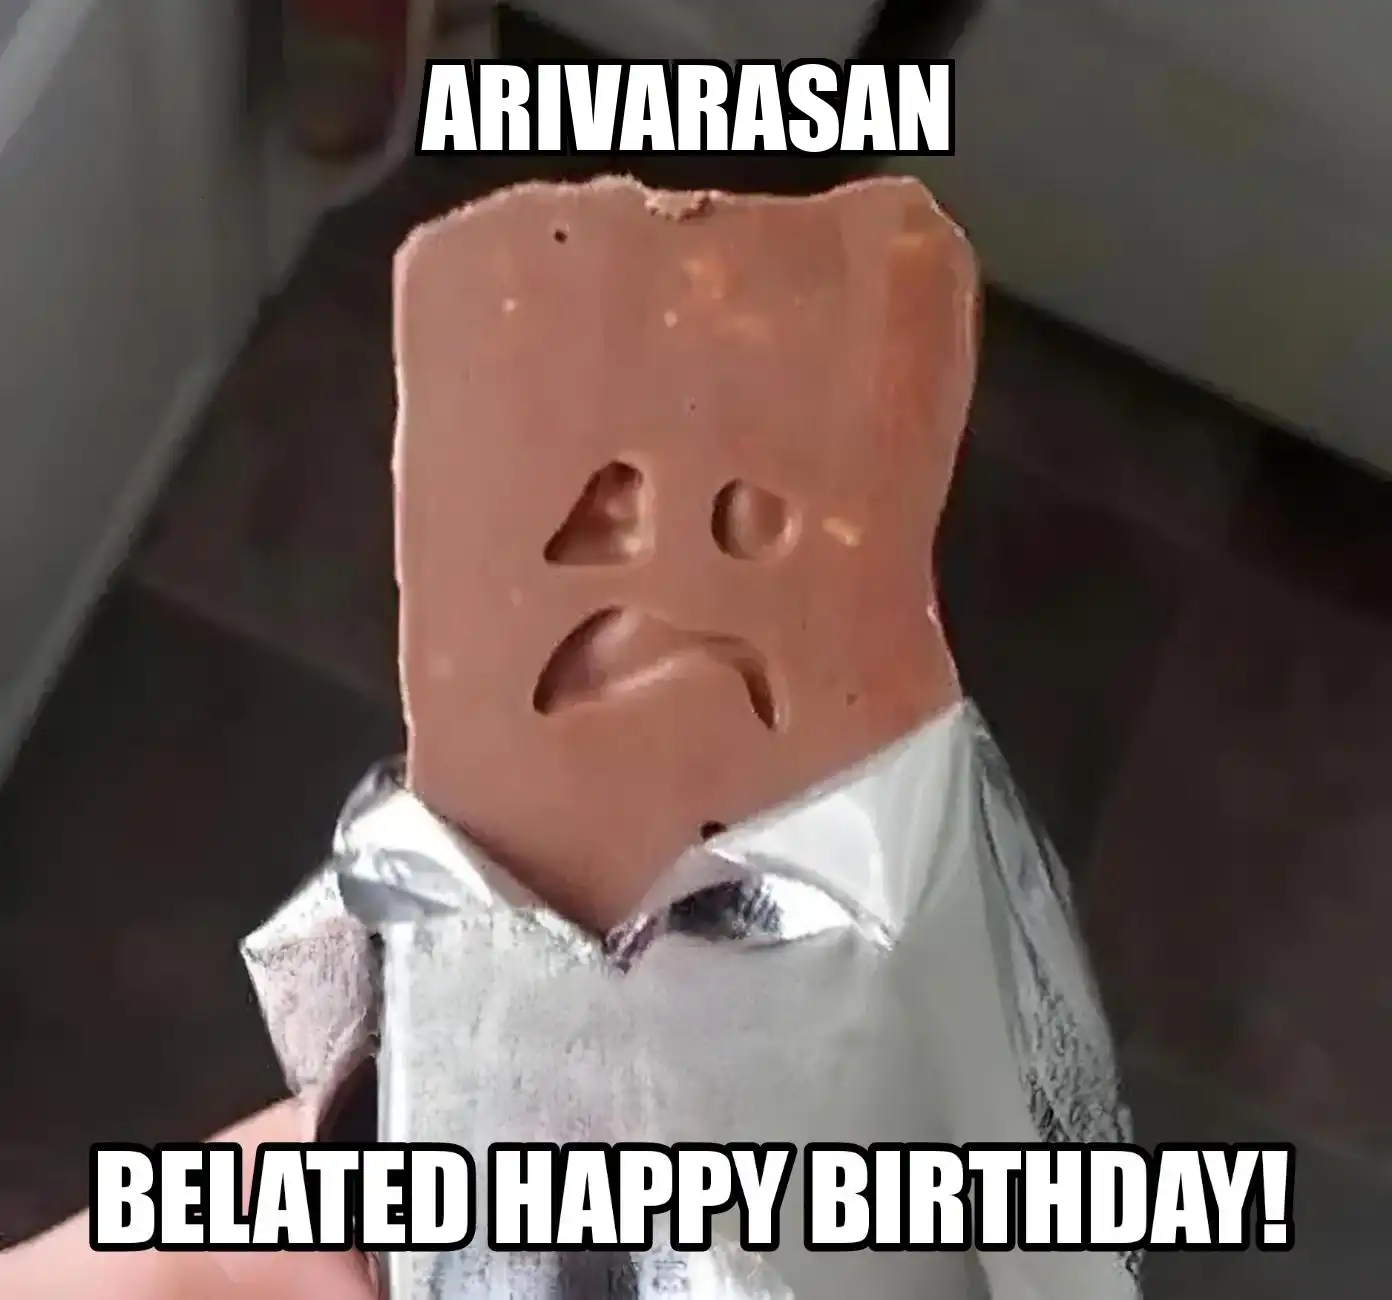 Happy Birthday Arivarasan Belated Happy Birthday Meme